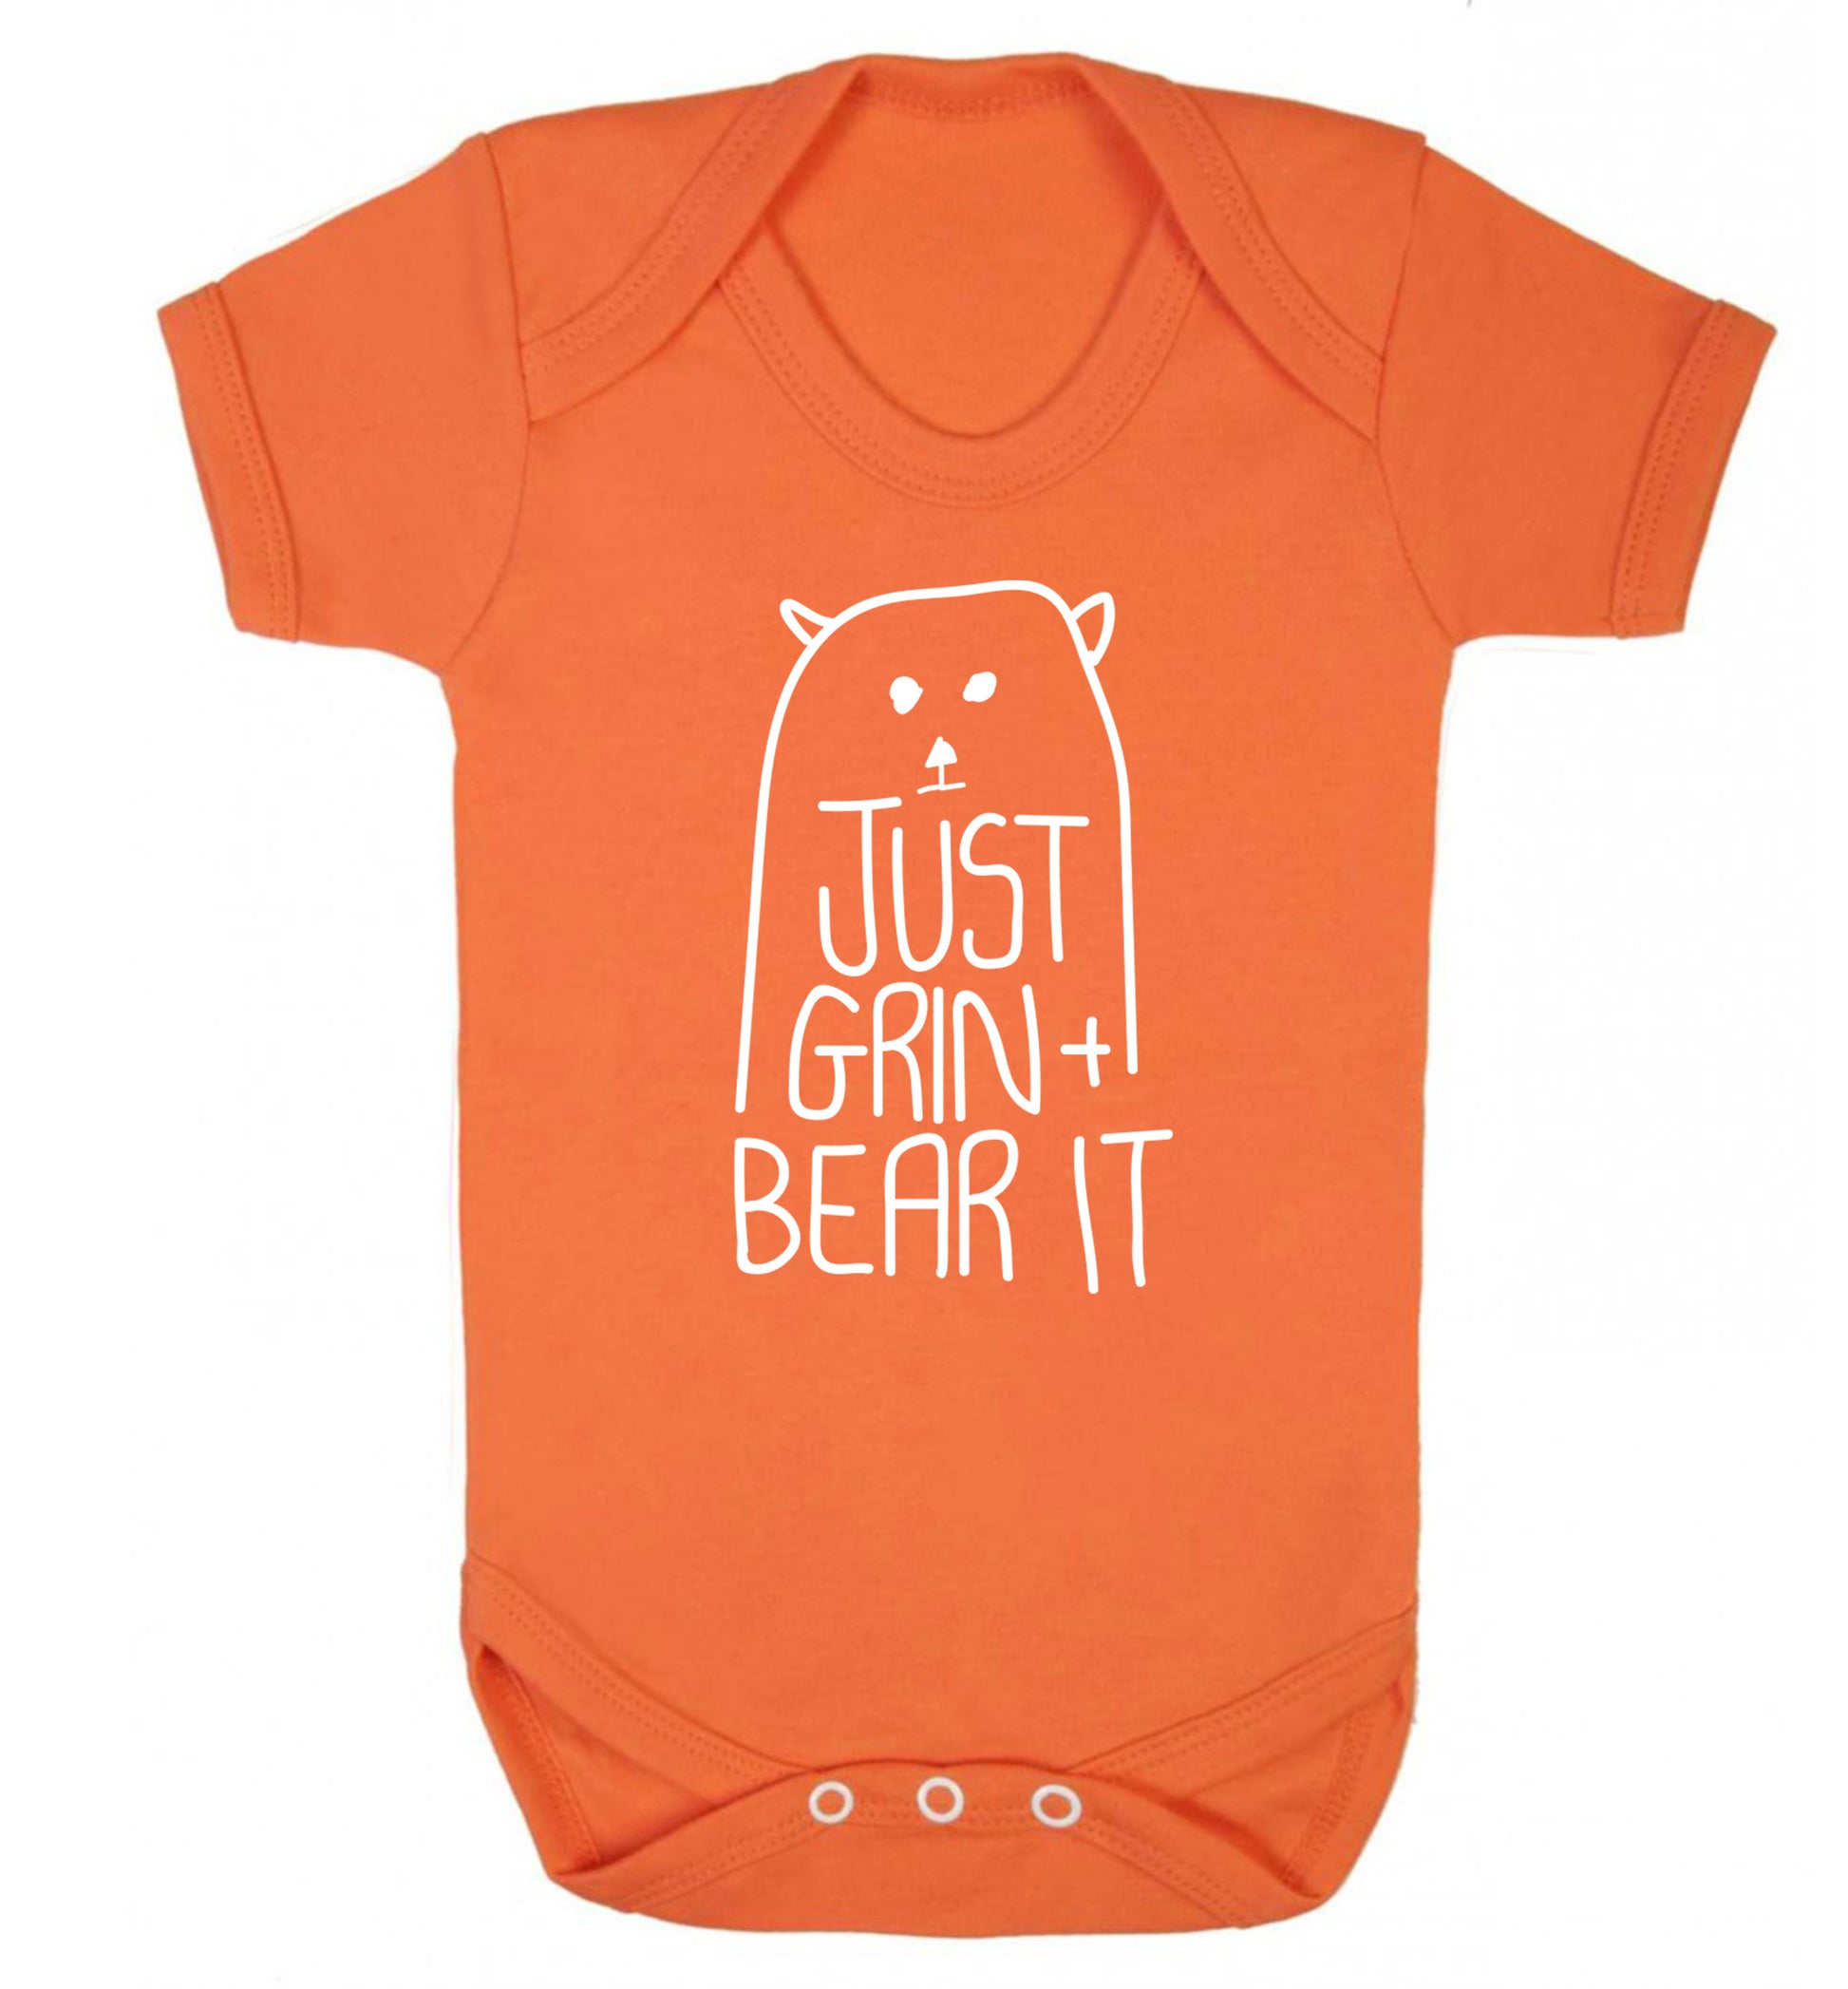 Just grin and bear it Baby Vest orange 18-24 months